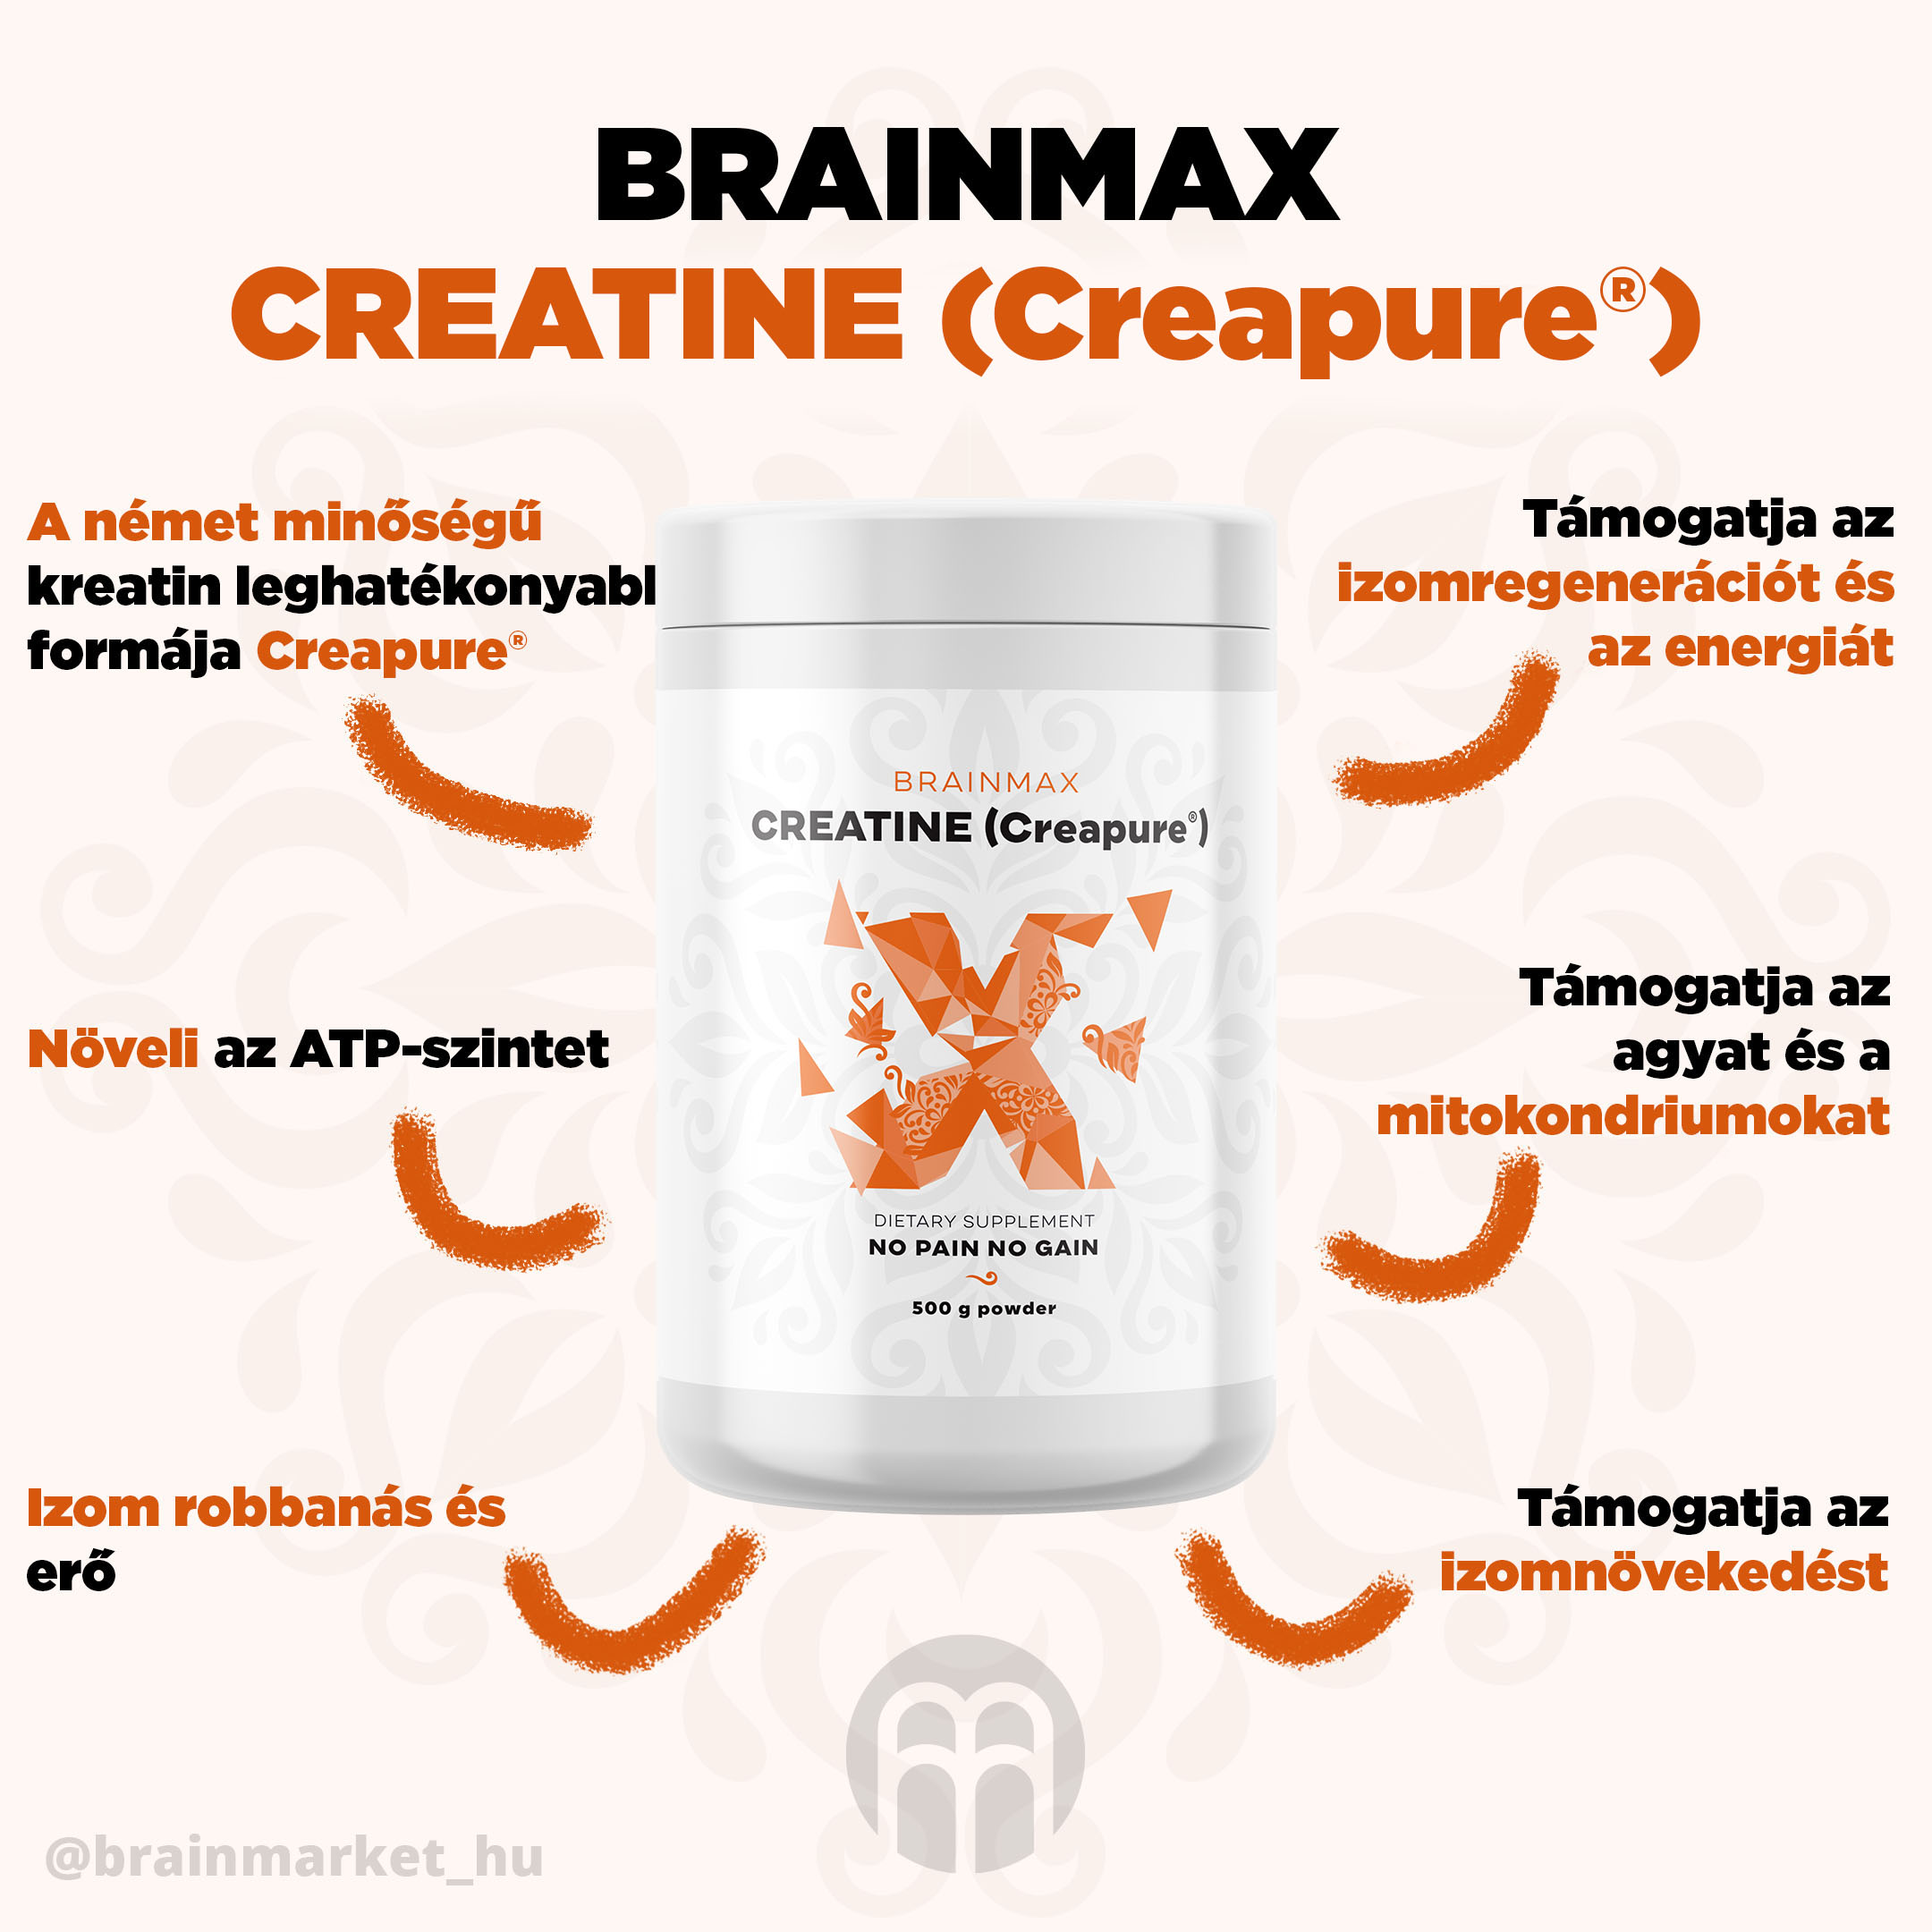 AAAbrainmax creapure kreatin blog-infographics brainmarket CZ